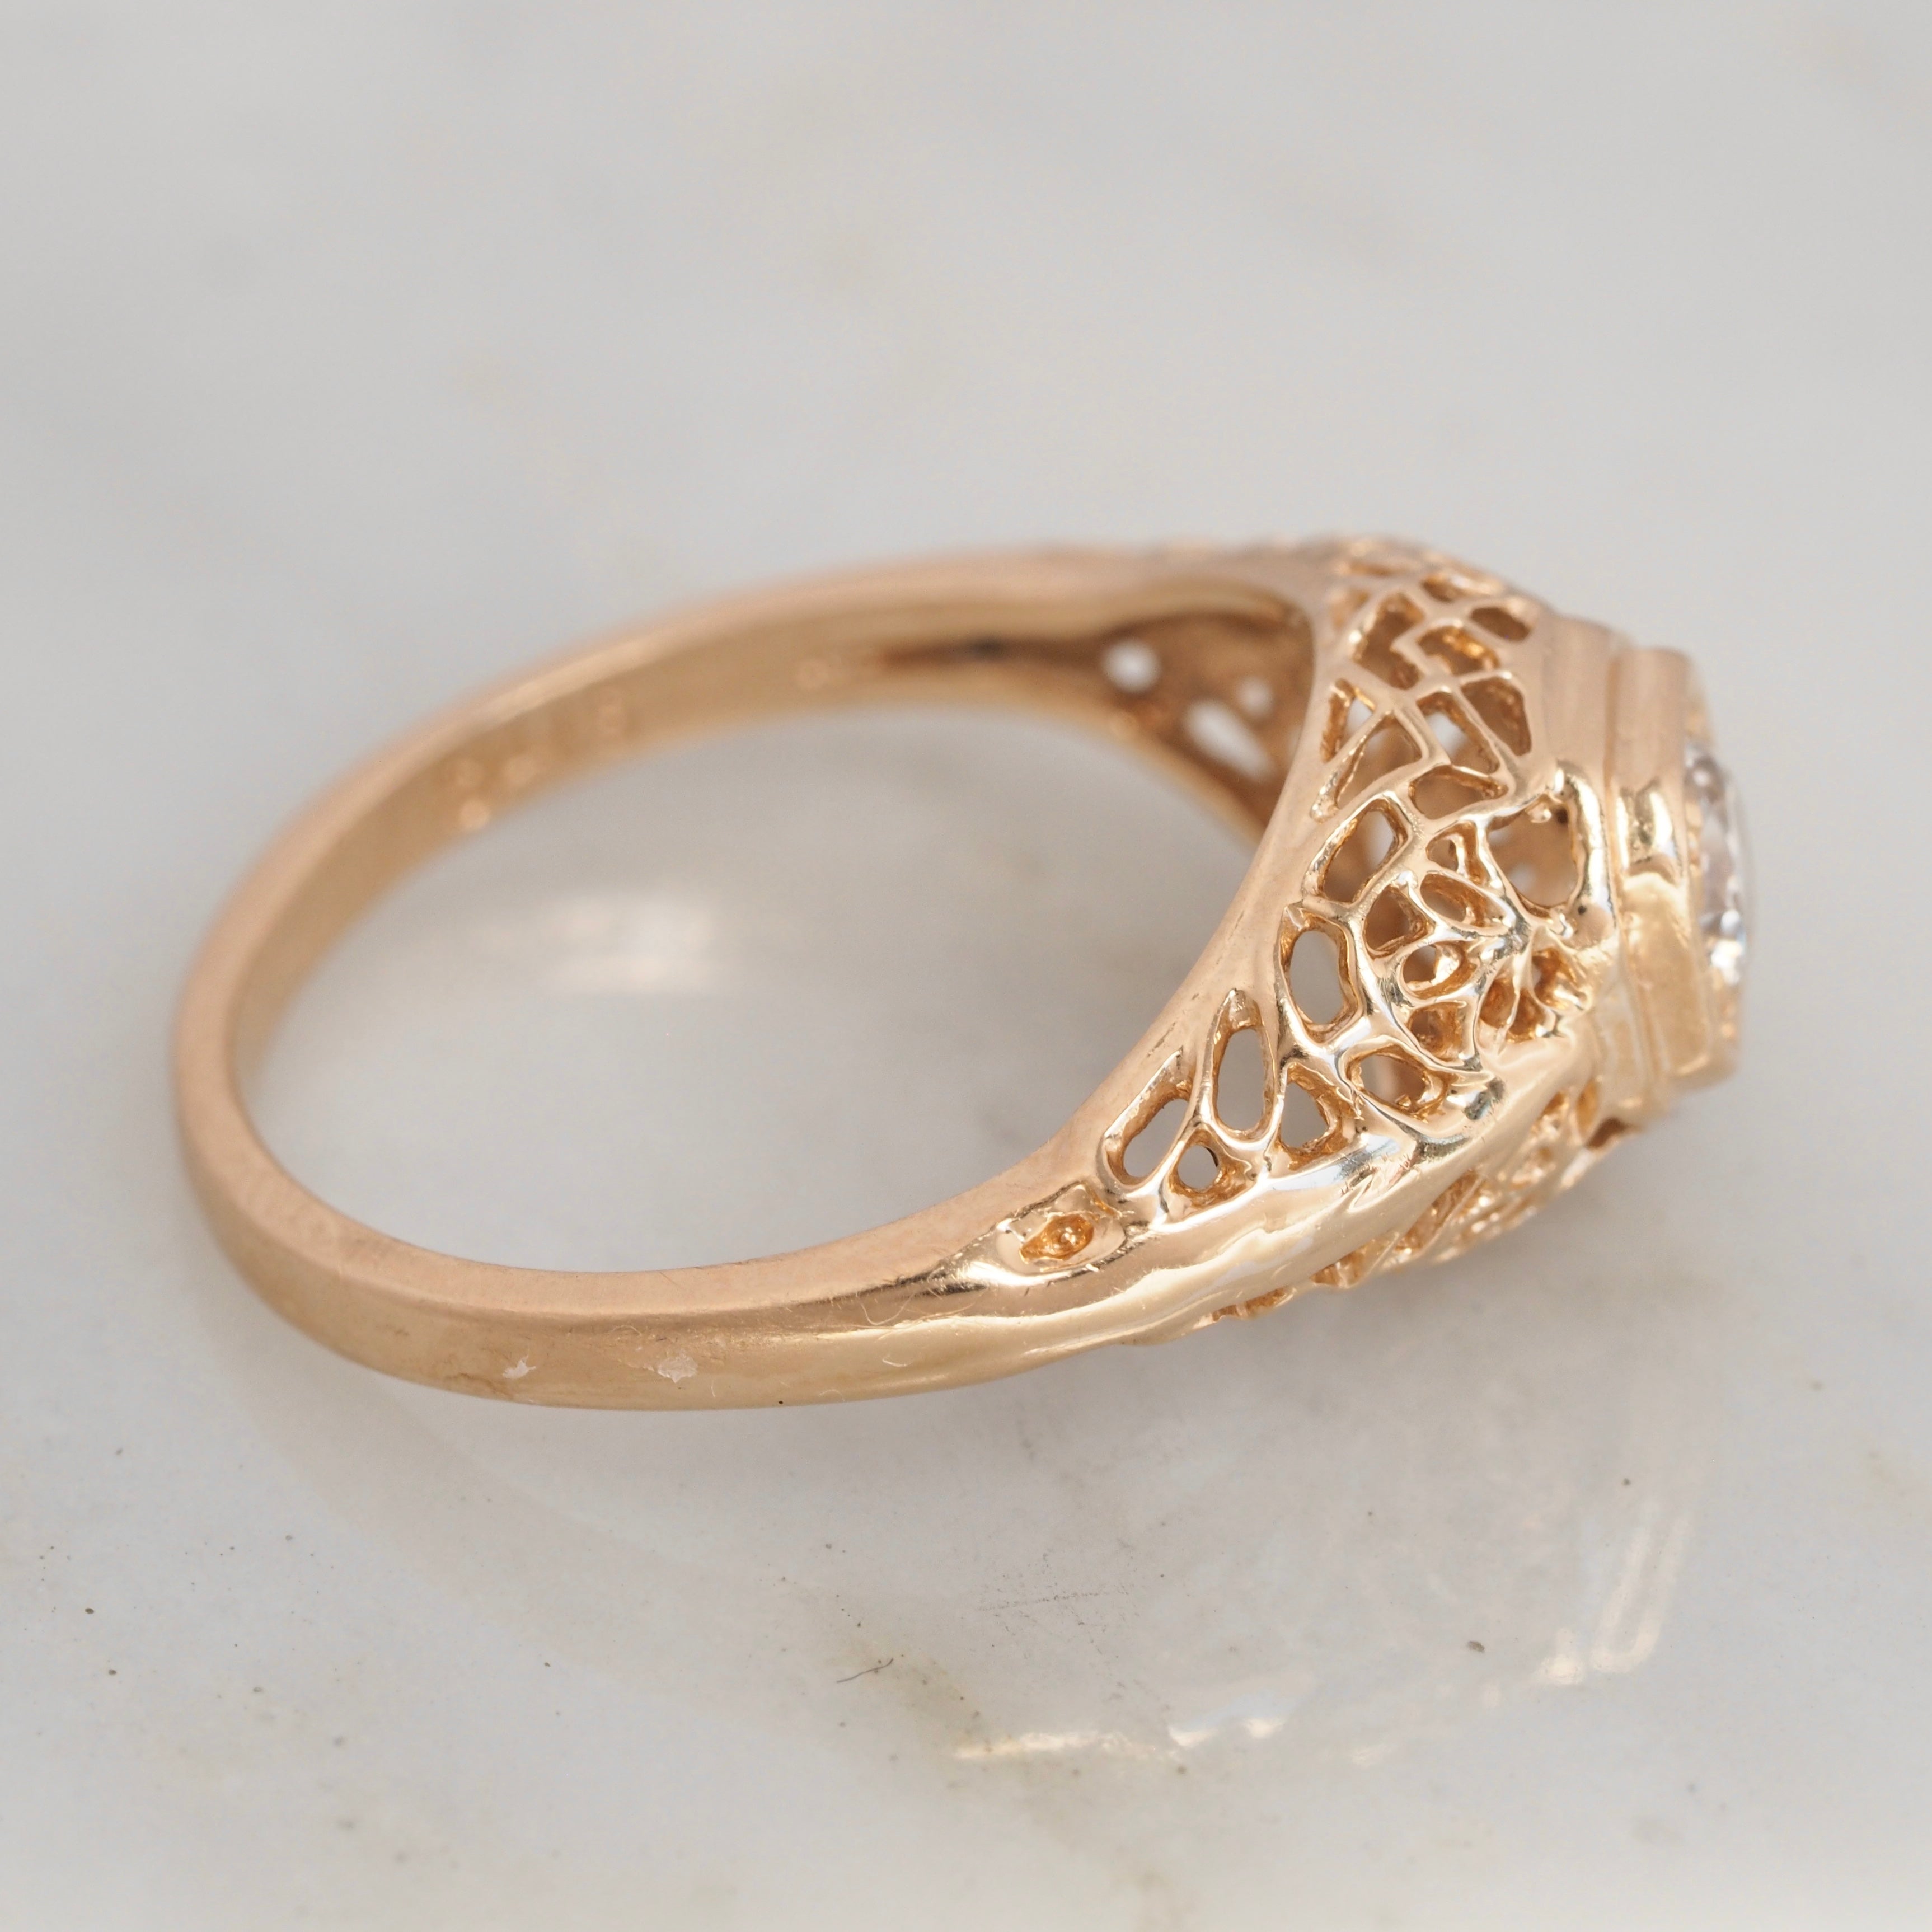 Vintage Art Deco Inspired 14k Gold Filigree Old European Cut Diamond Ring